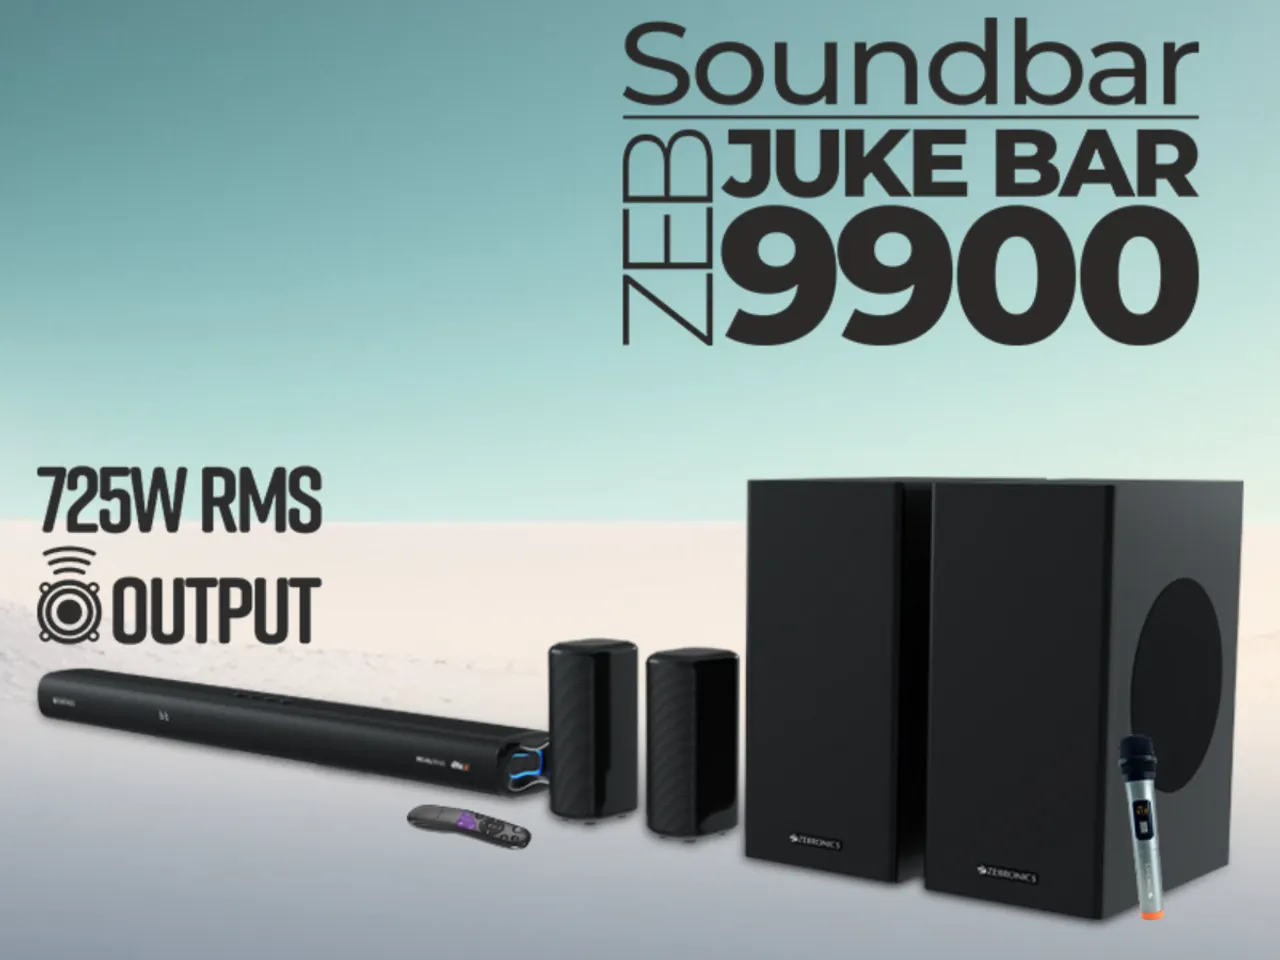 Zebronics Launches ZEB-Juke Bar 9900 Soundbar